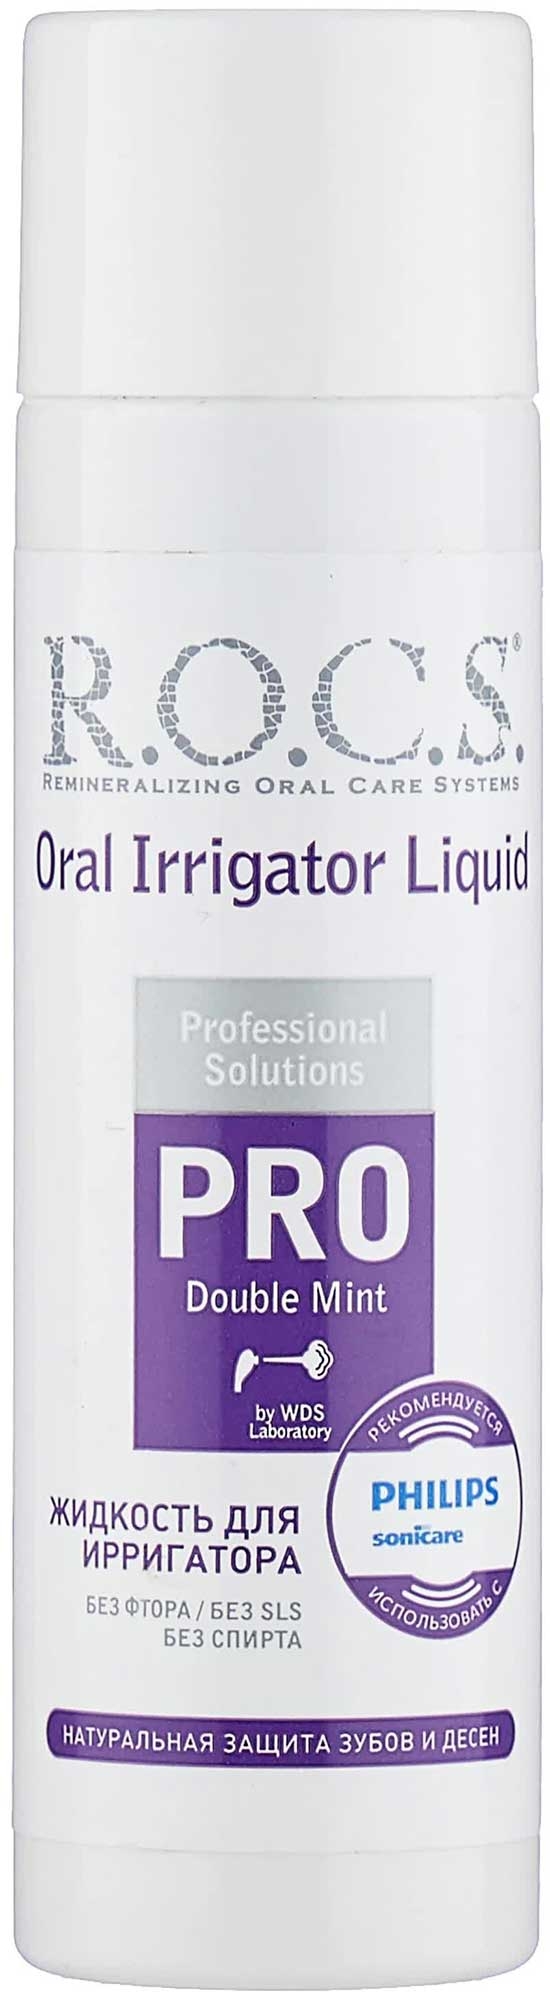 R.O.C.S. Жидкость PRO Oral Irrigator Liquid для Ирригатора, 75 мл